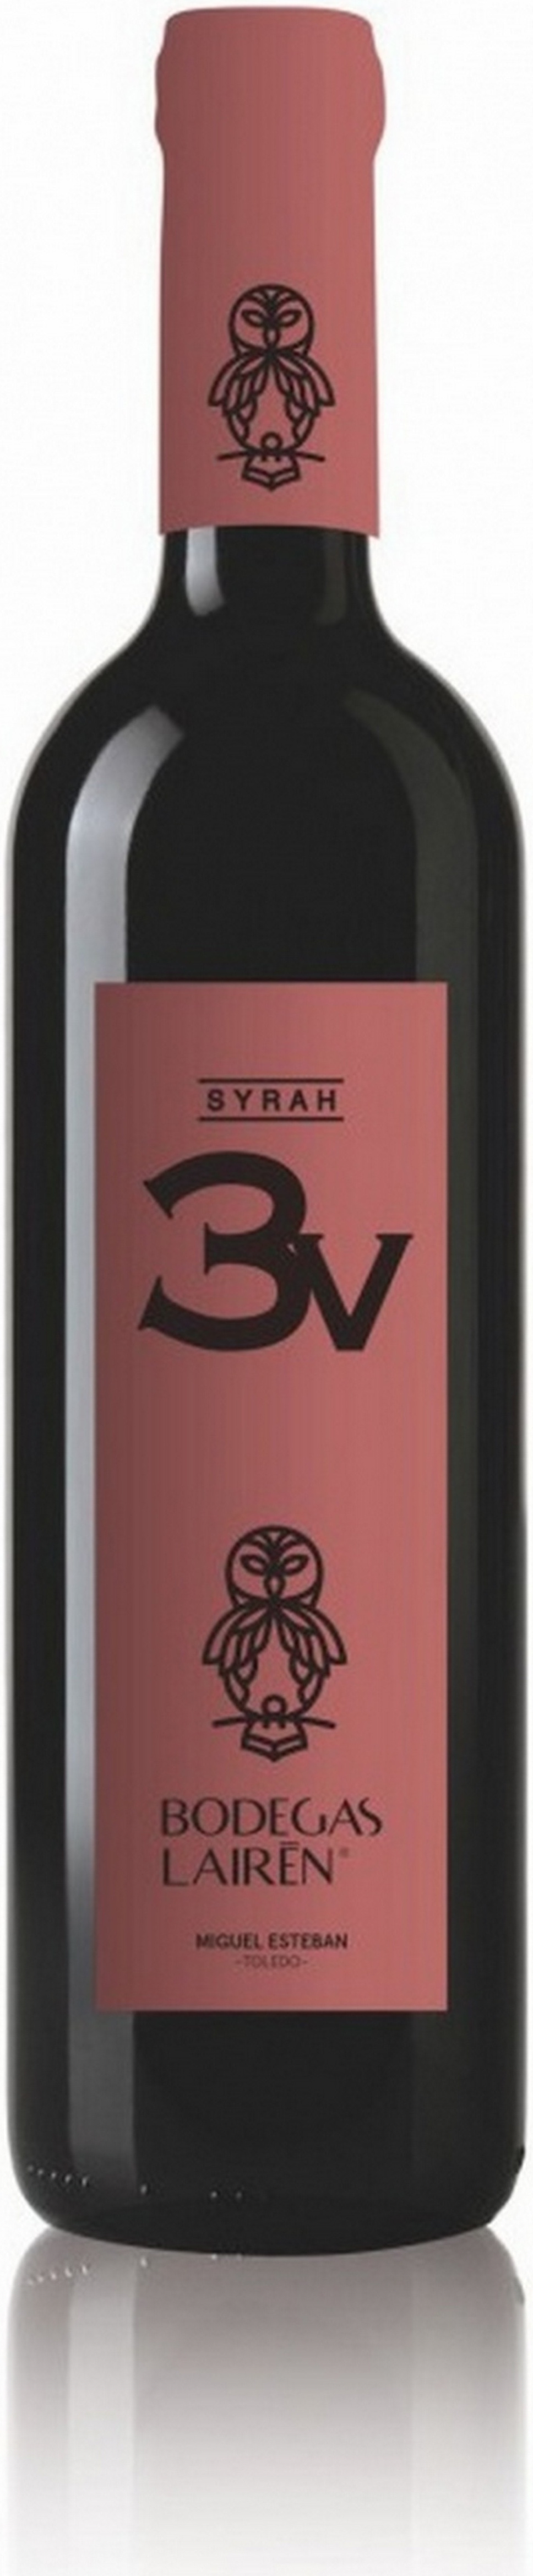 3v-syrah-2015